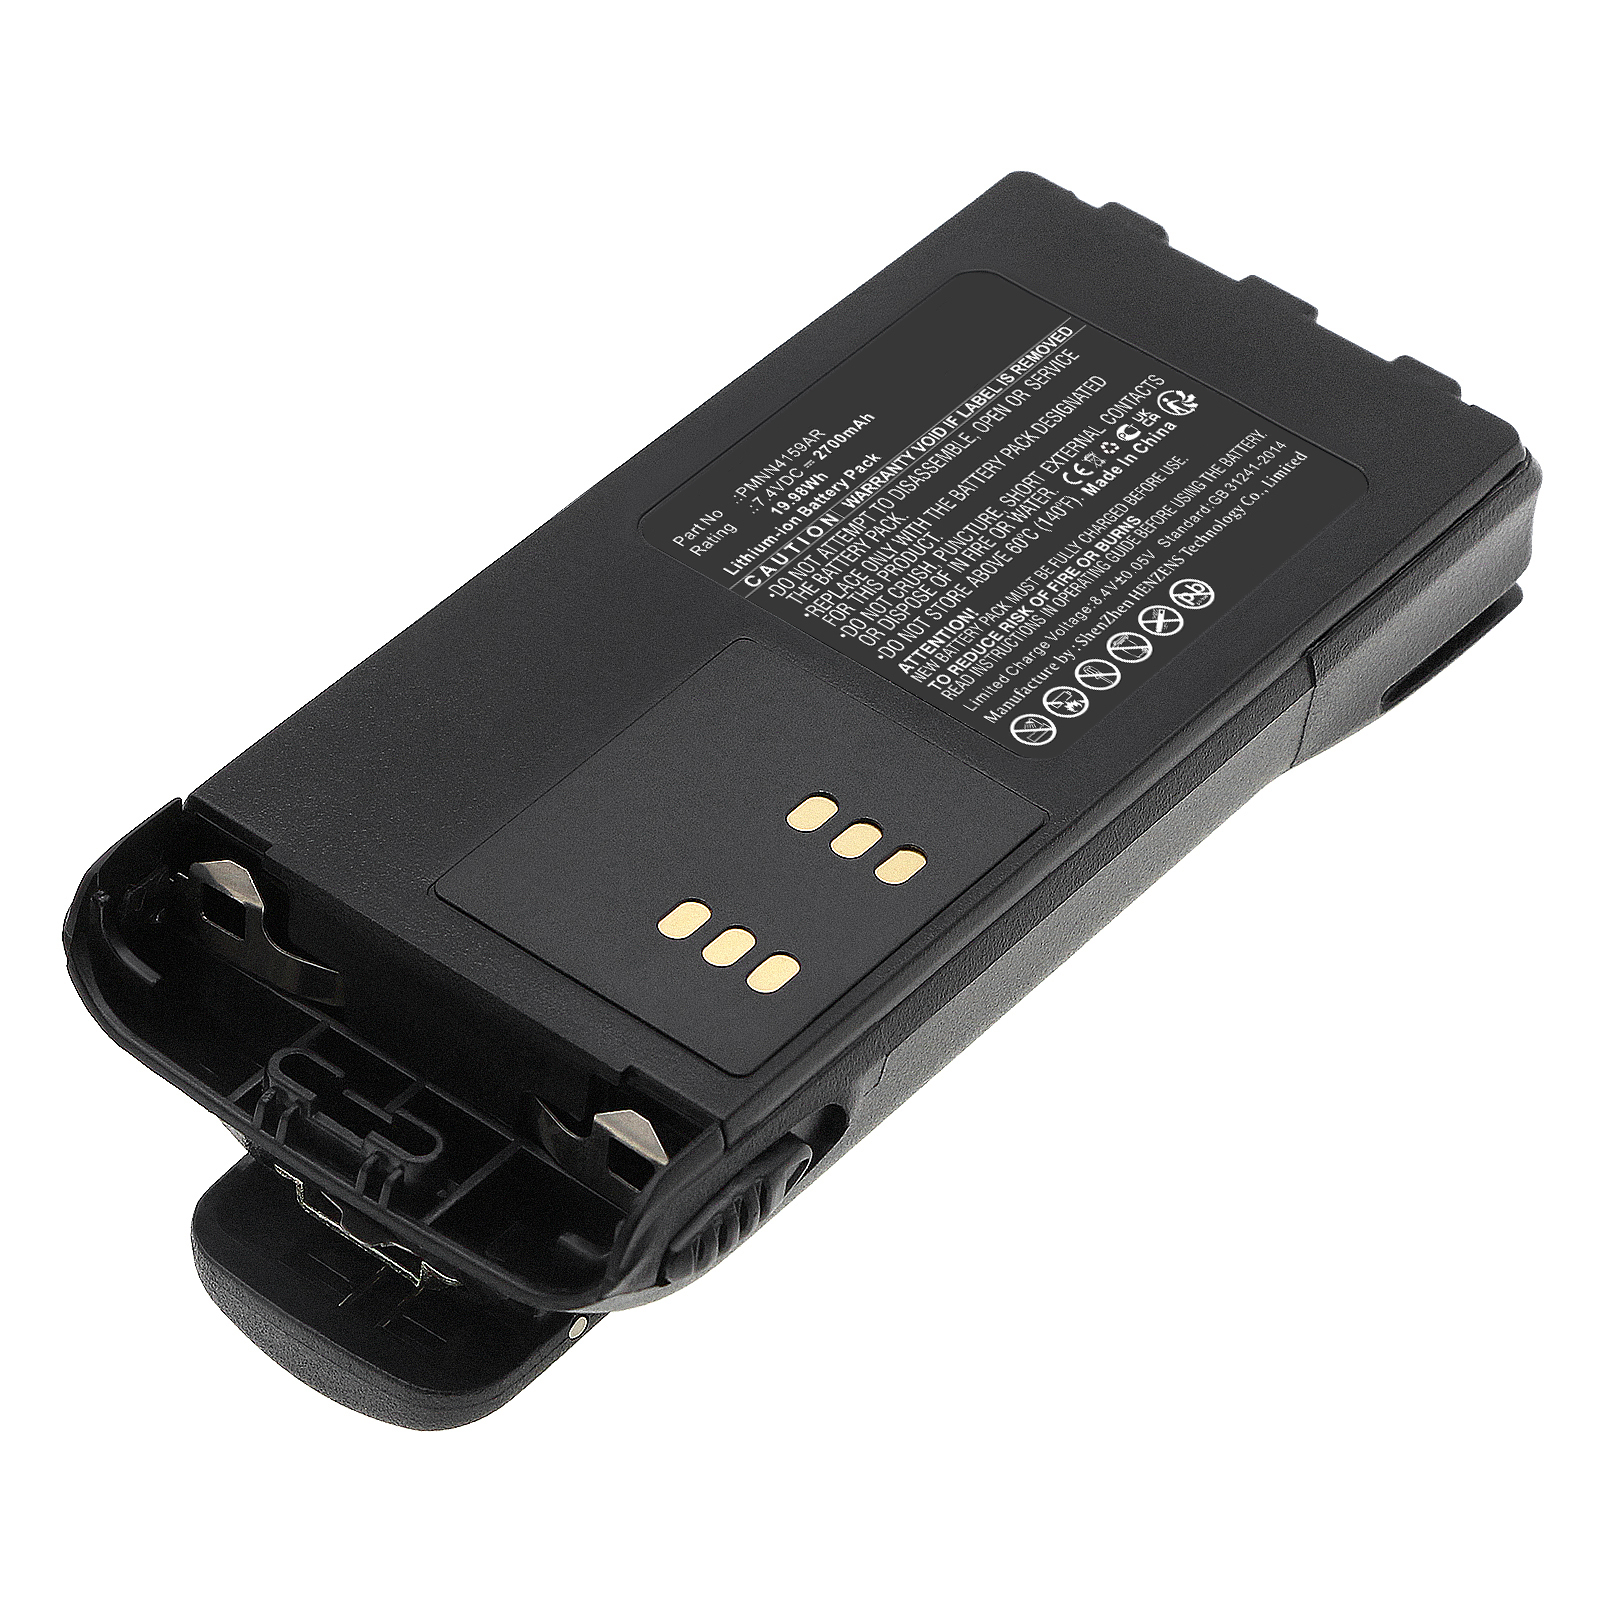 Synergy Digital 2-Way Radio Battery, Compatible with Motorola HMNN4151 2-Way Radio Battery (Li-ion, 7.4V, 2700mAh)